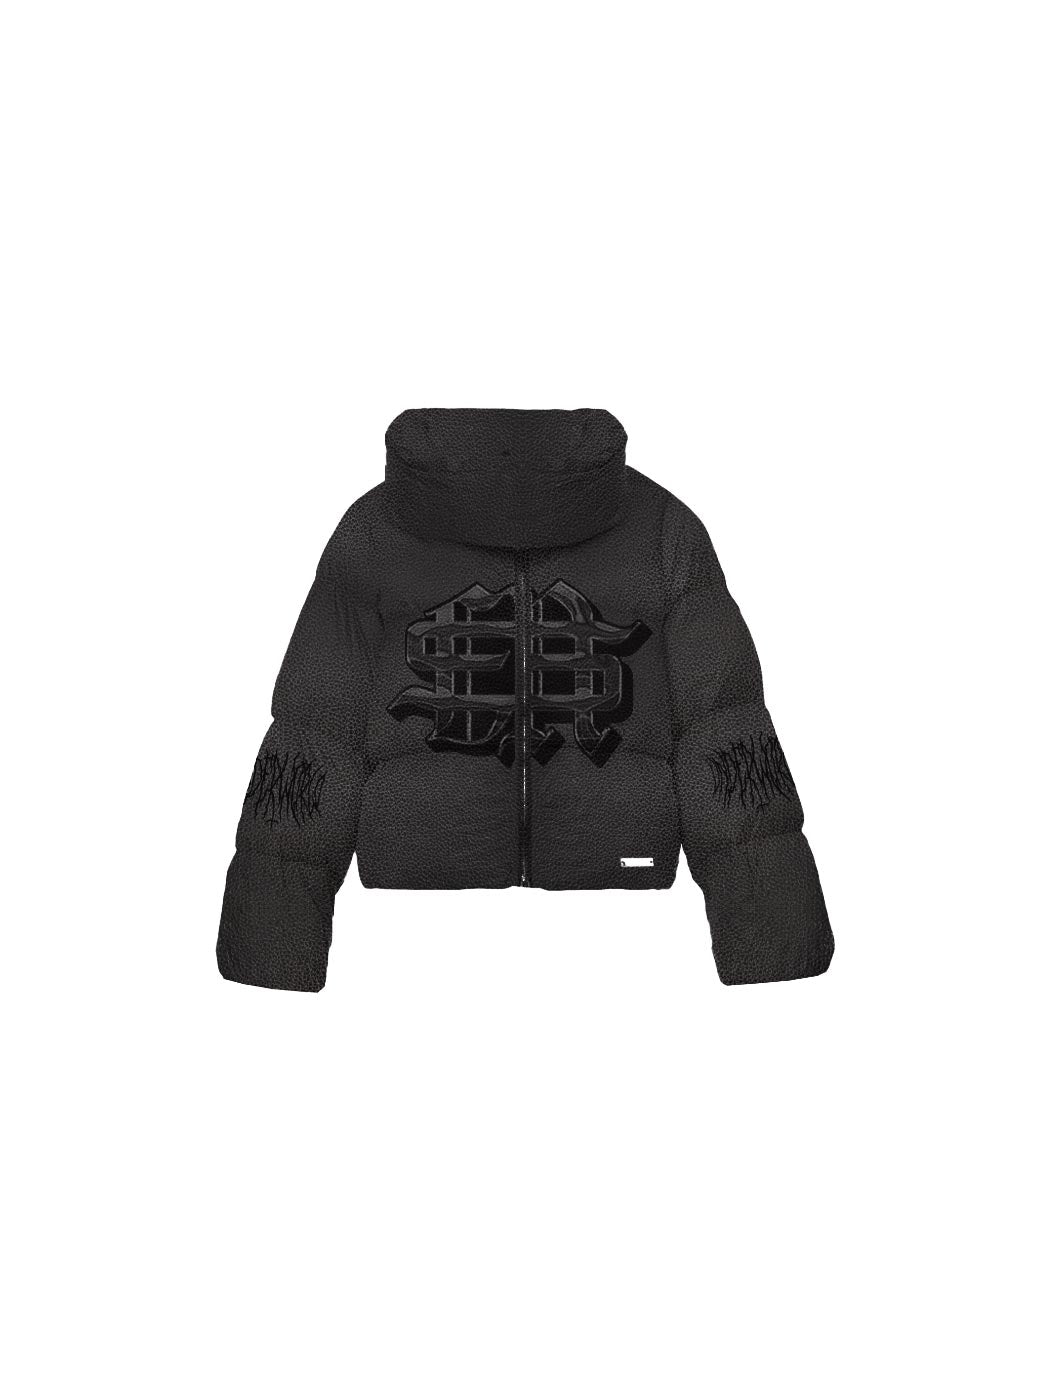 Sole et. Al Metro Leather Puffer Jacket : Noir